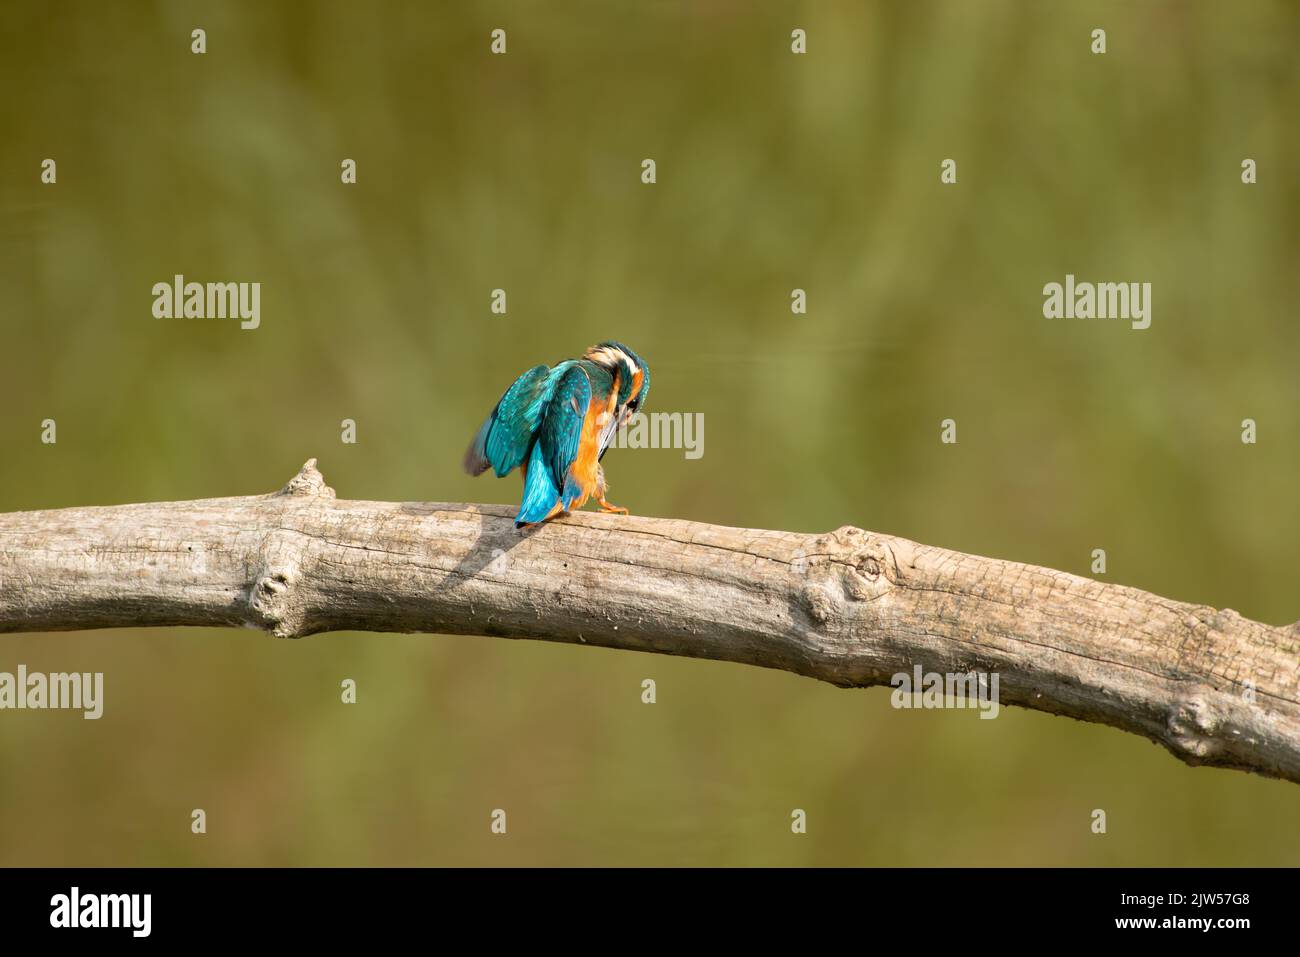 Birdwatching - King Fisher Stock Photo